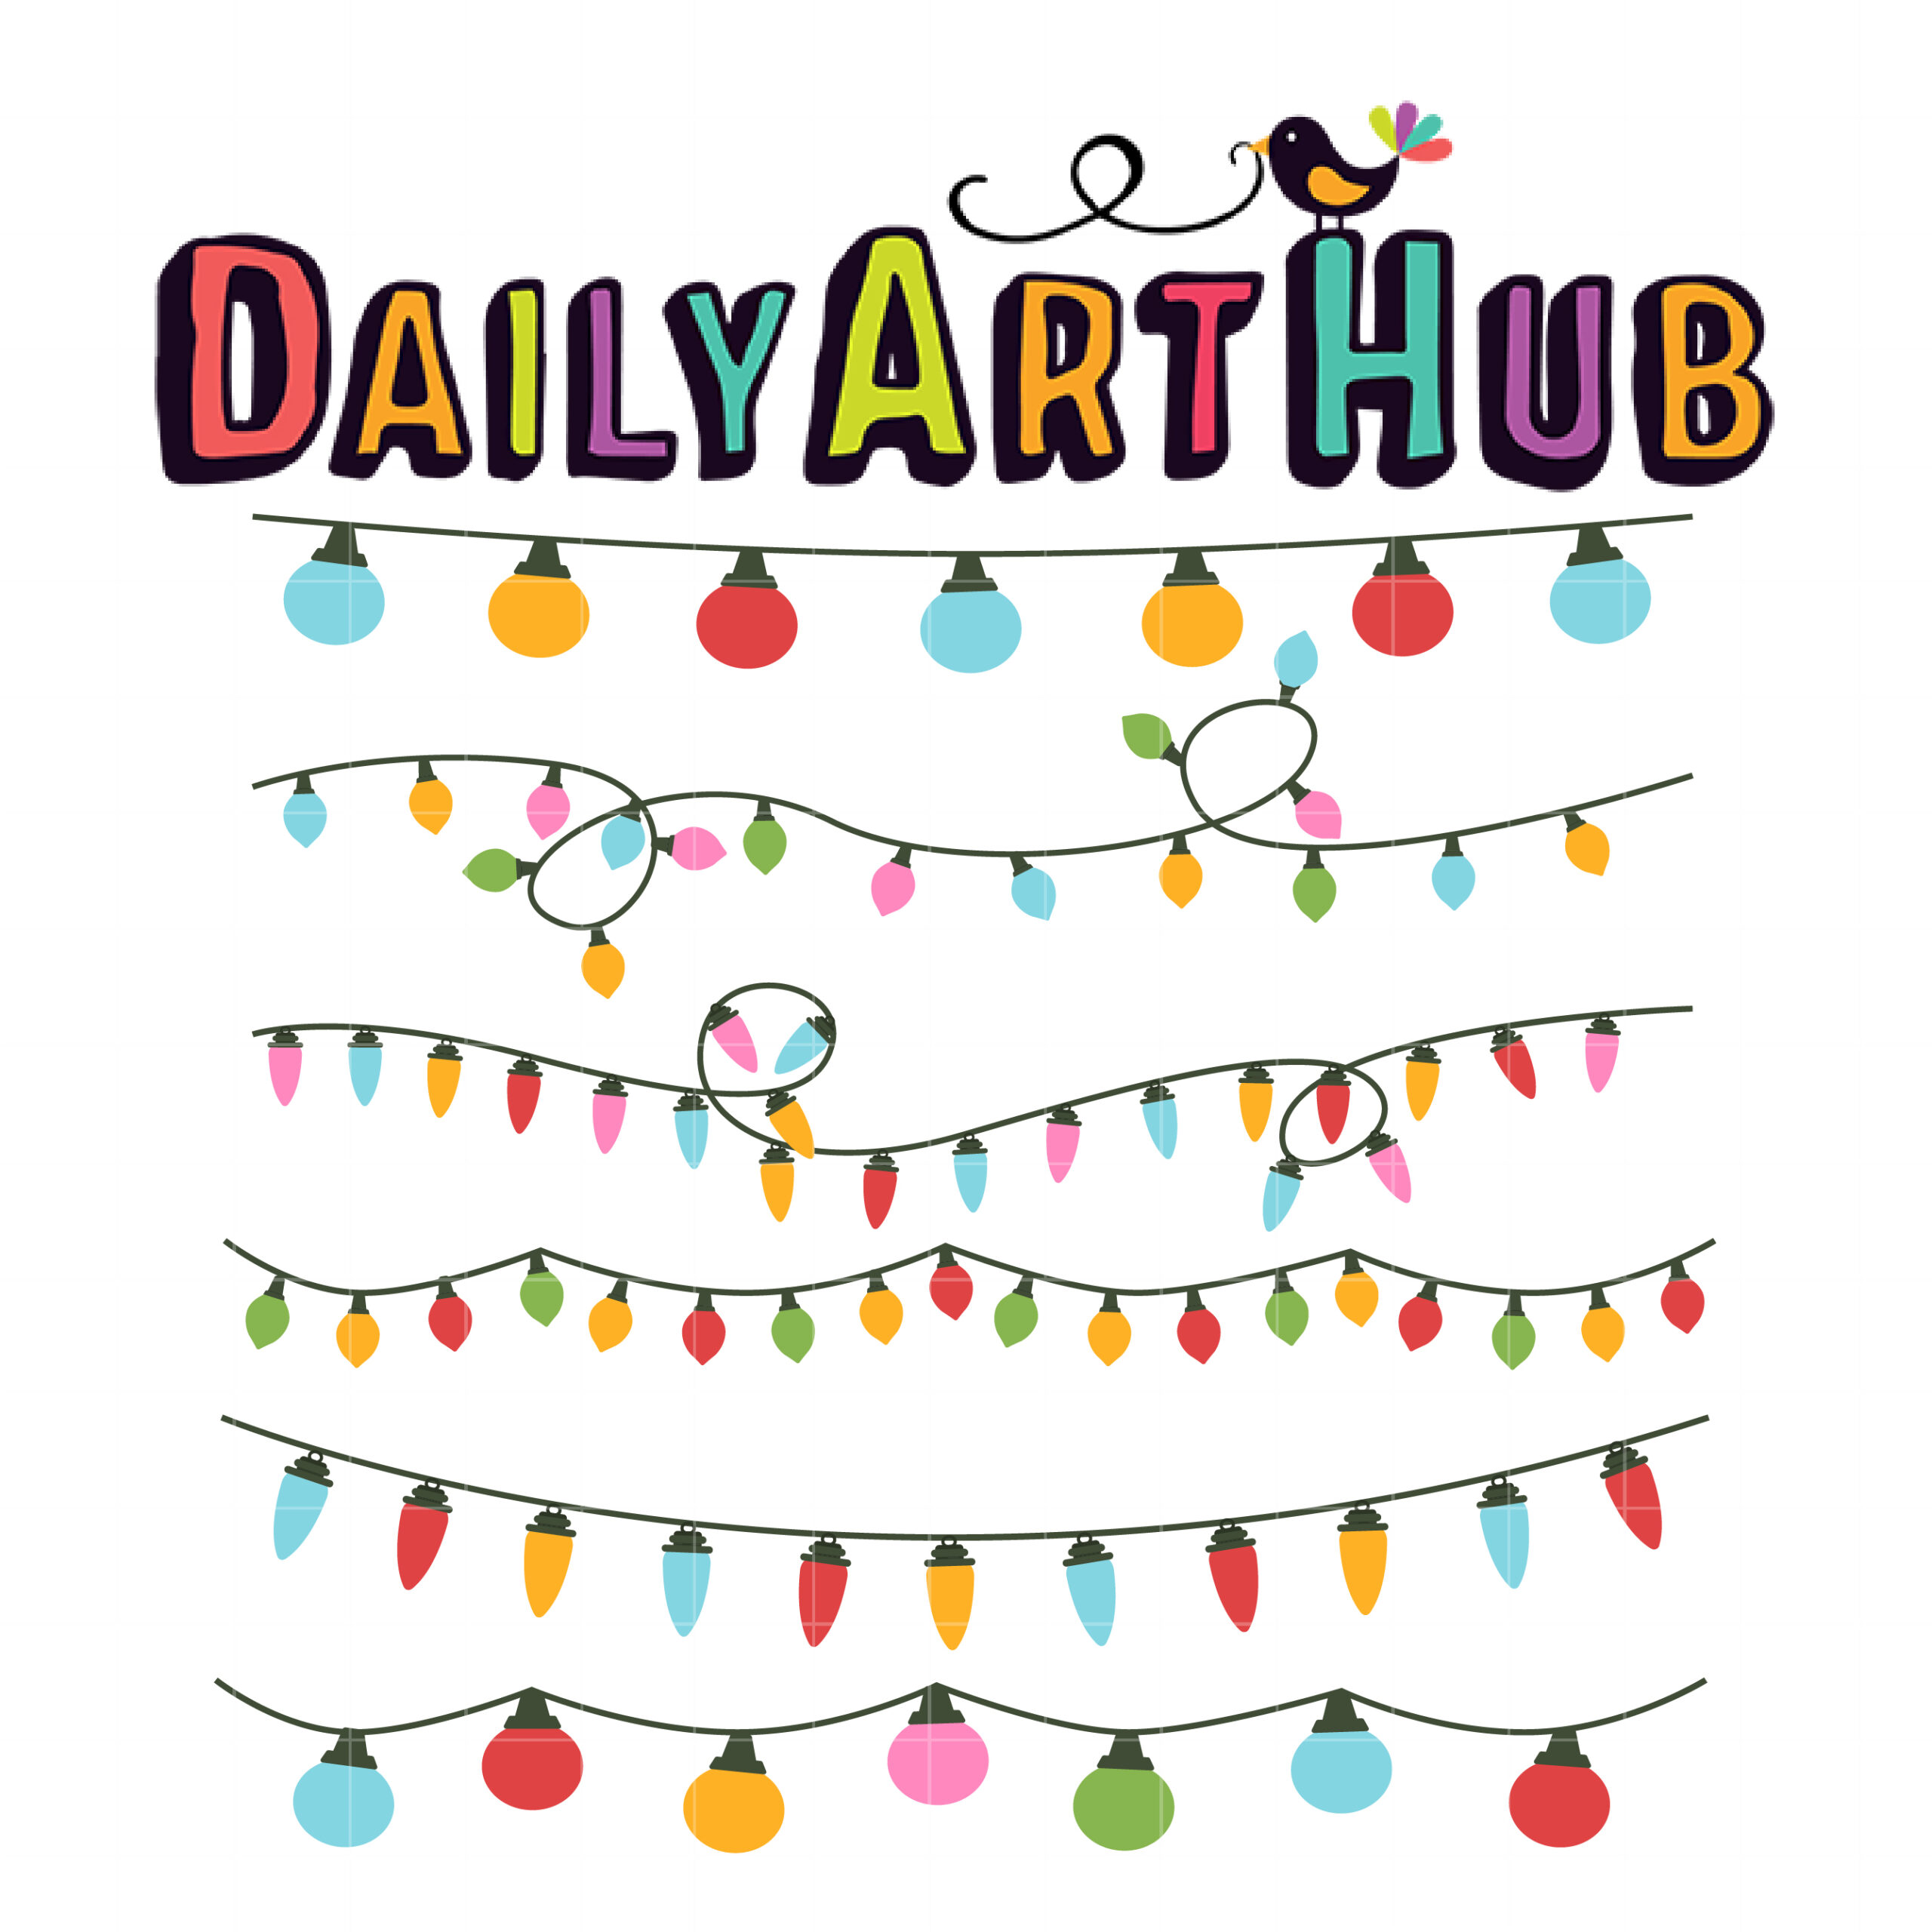 Christmas Tags Clip Art Set – Daily Art Hub // Graphics, Alphabets & SVG